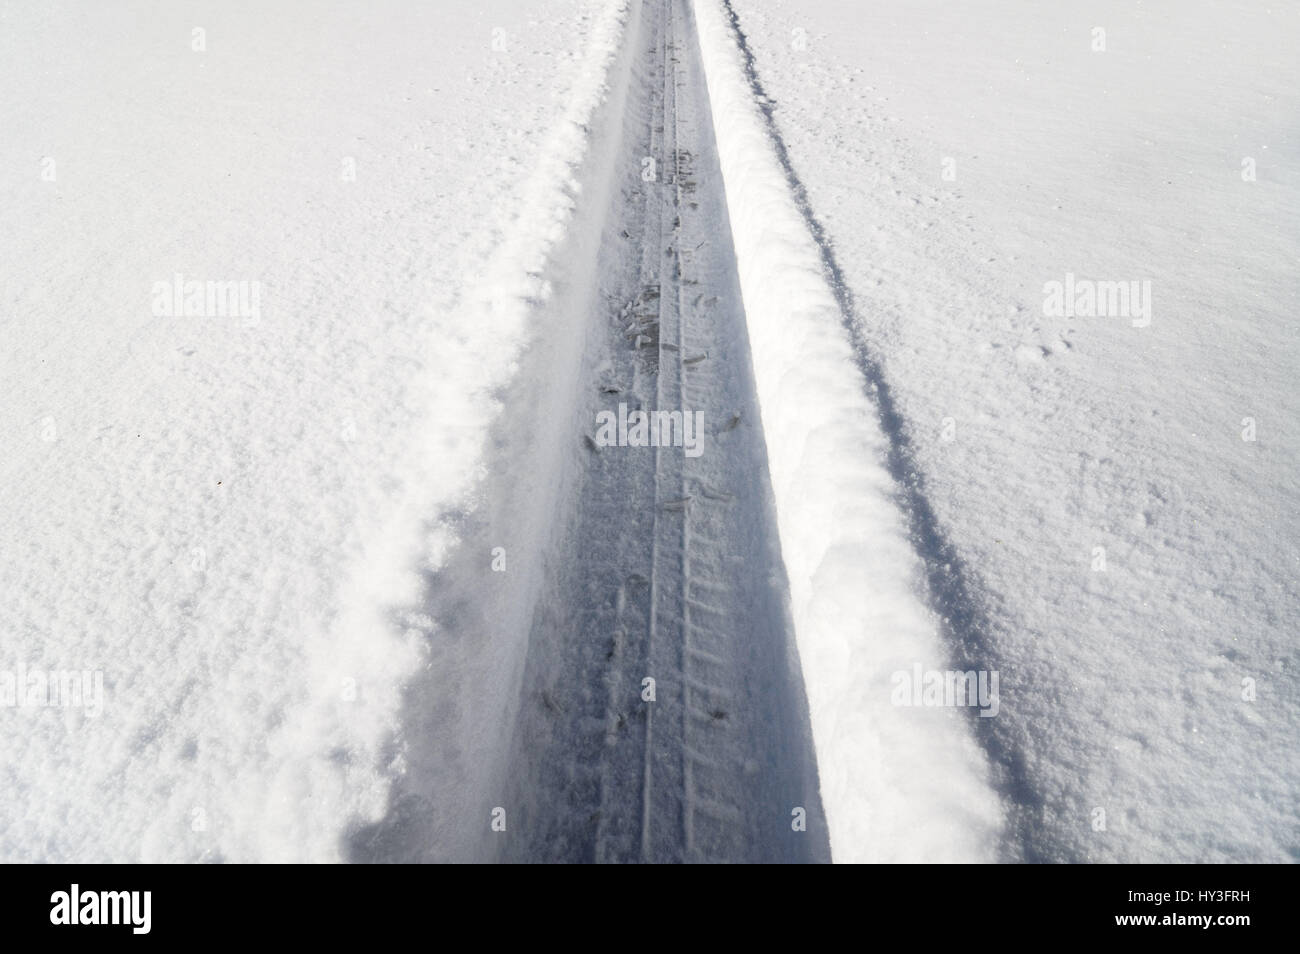 Tyre-purely in the snow, Reifenspur im Schnee Stock Photo